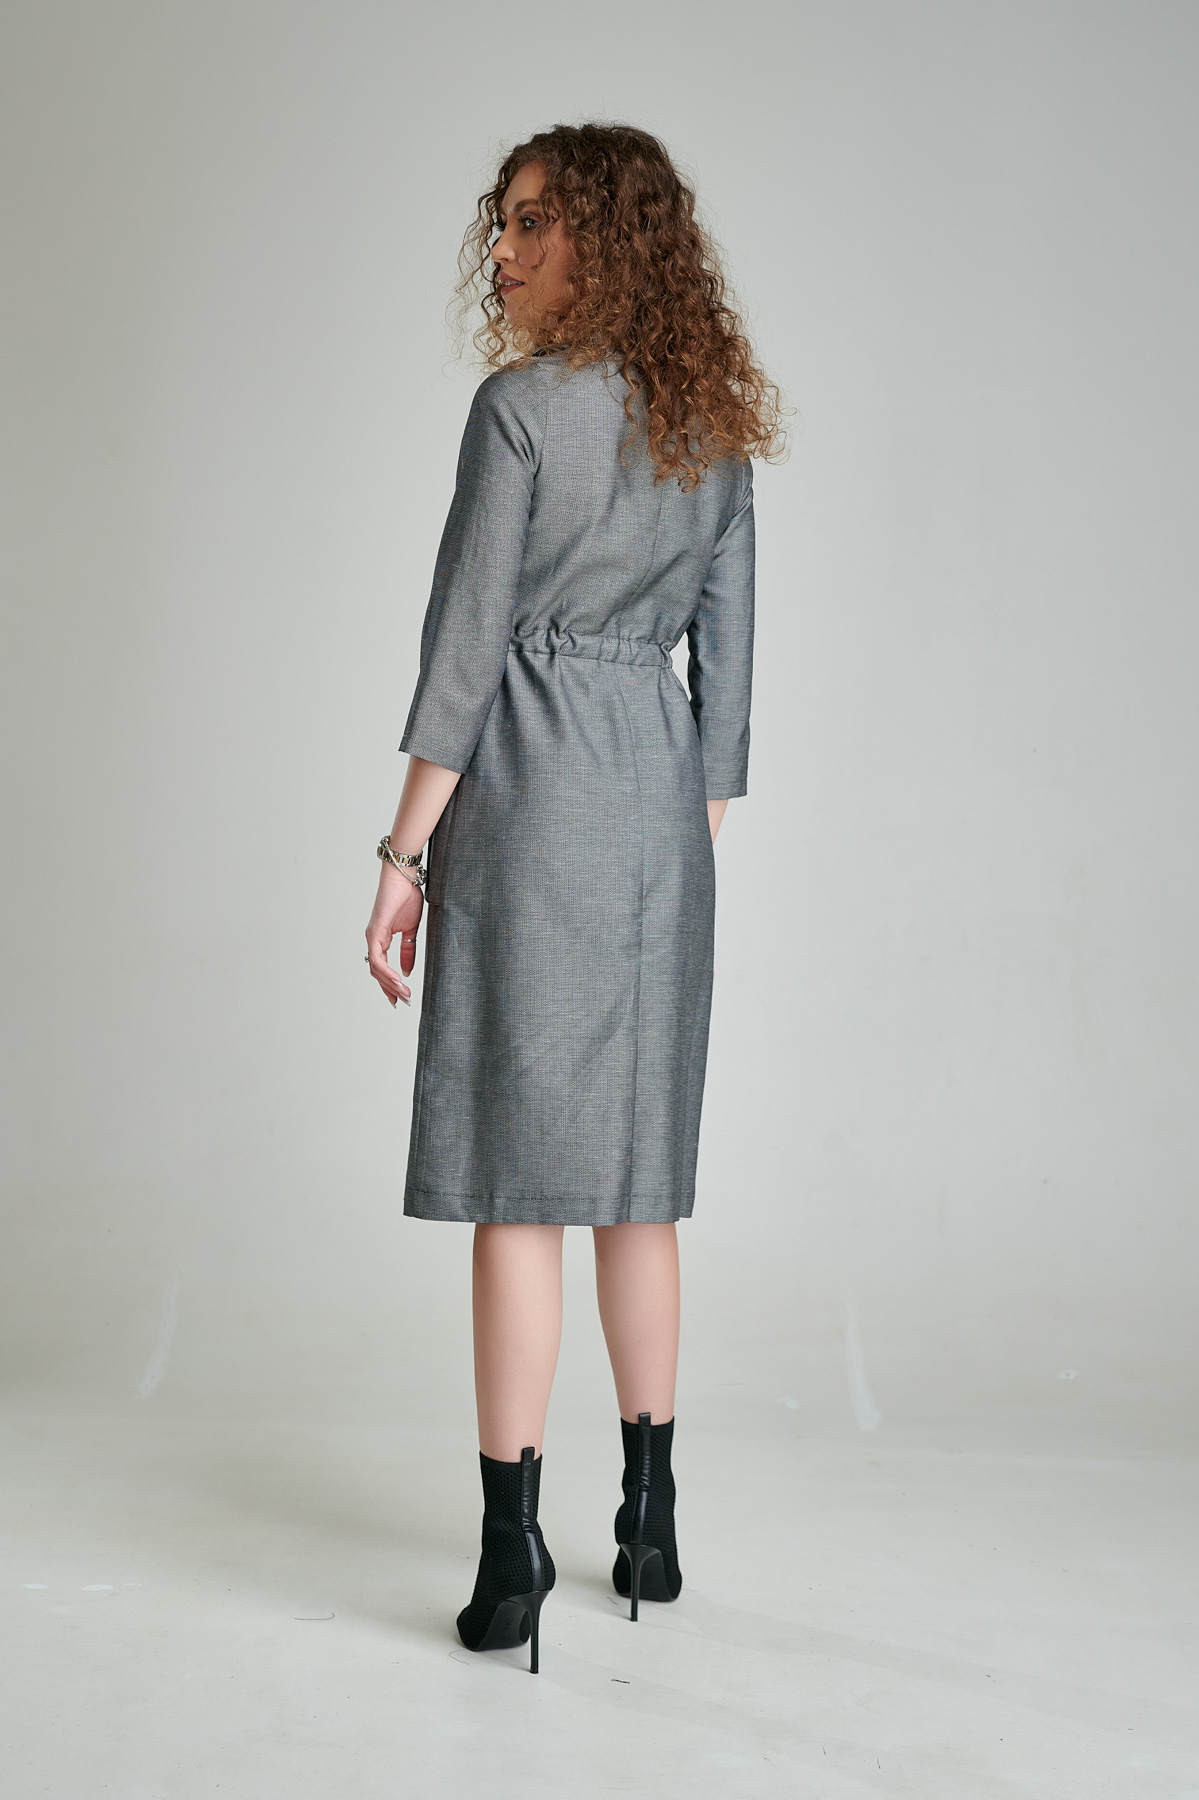 STELLA casual dark gray dress. Natural fabrics, original design, handmade embroidery